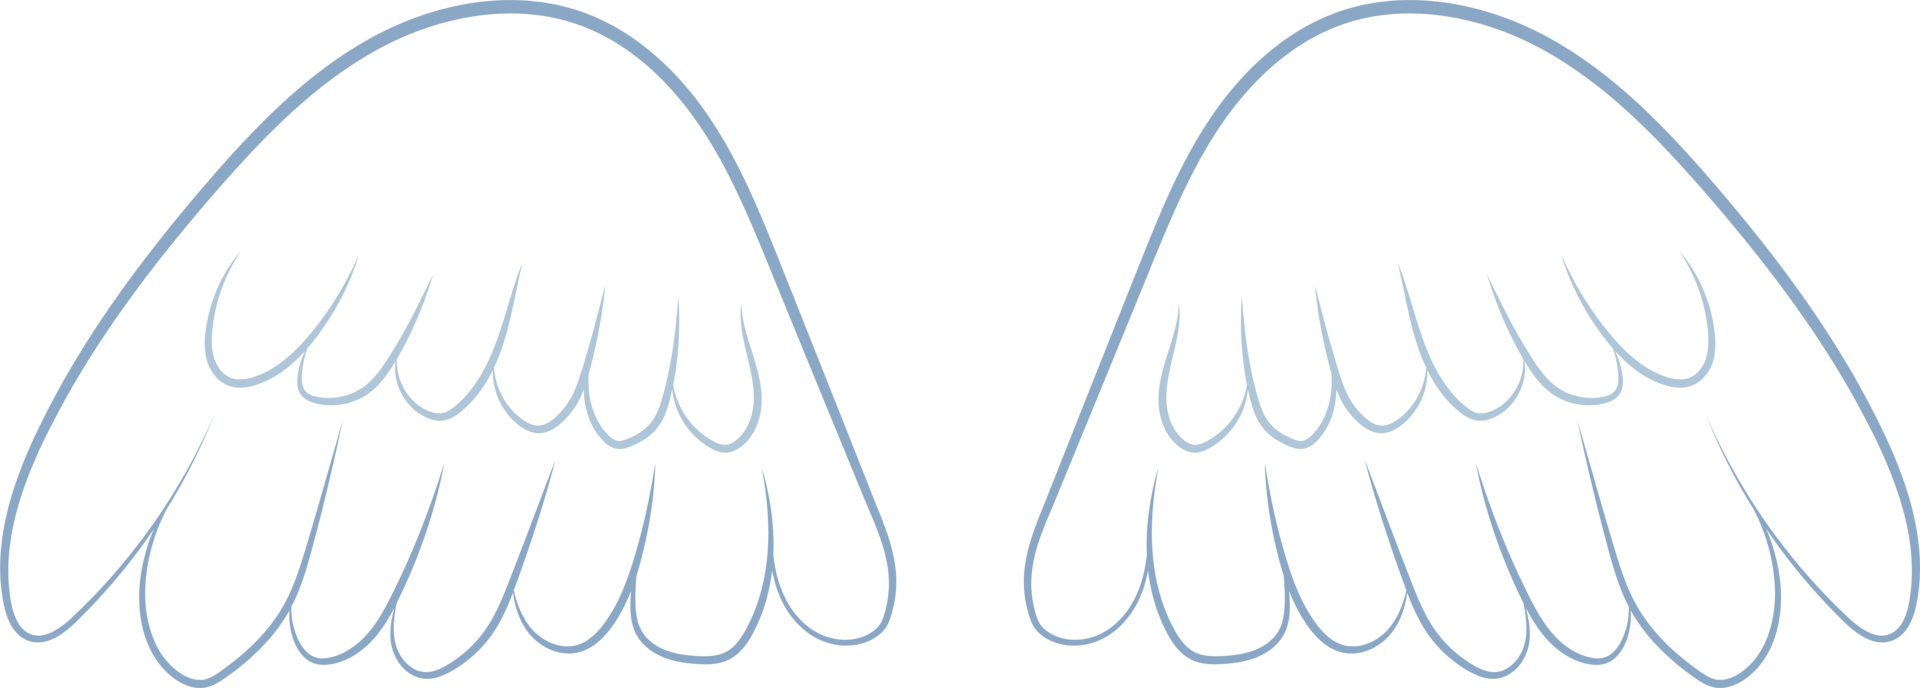 engel vleugels clipart ontwerp illustratie png